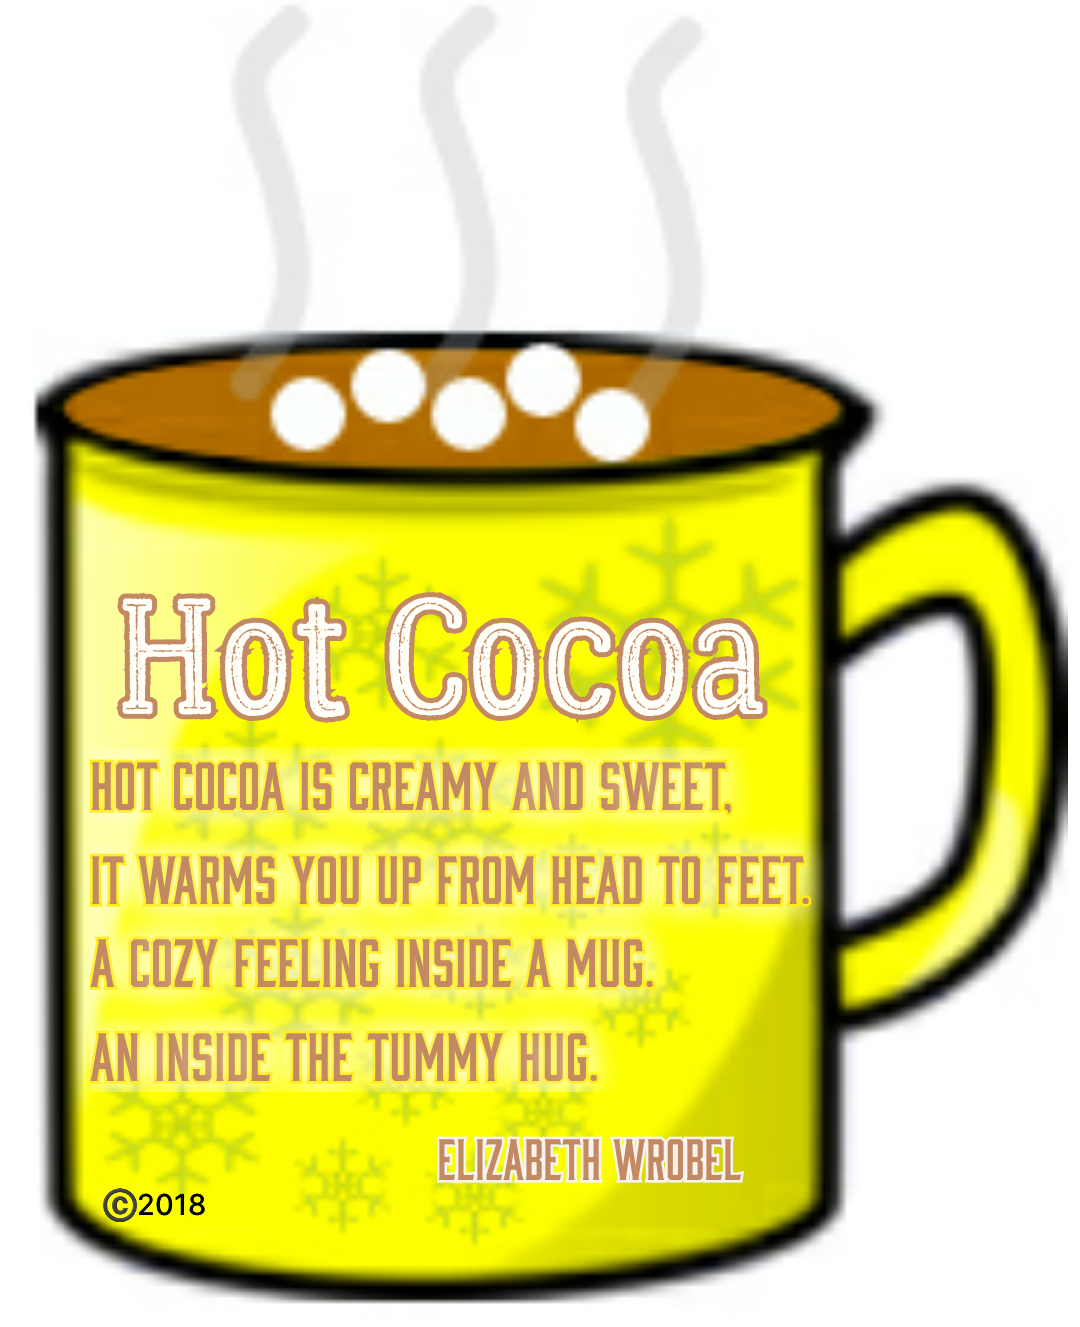 Hot Cocoa a warm rhyme for wintertime by Elizabeth Wrobel